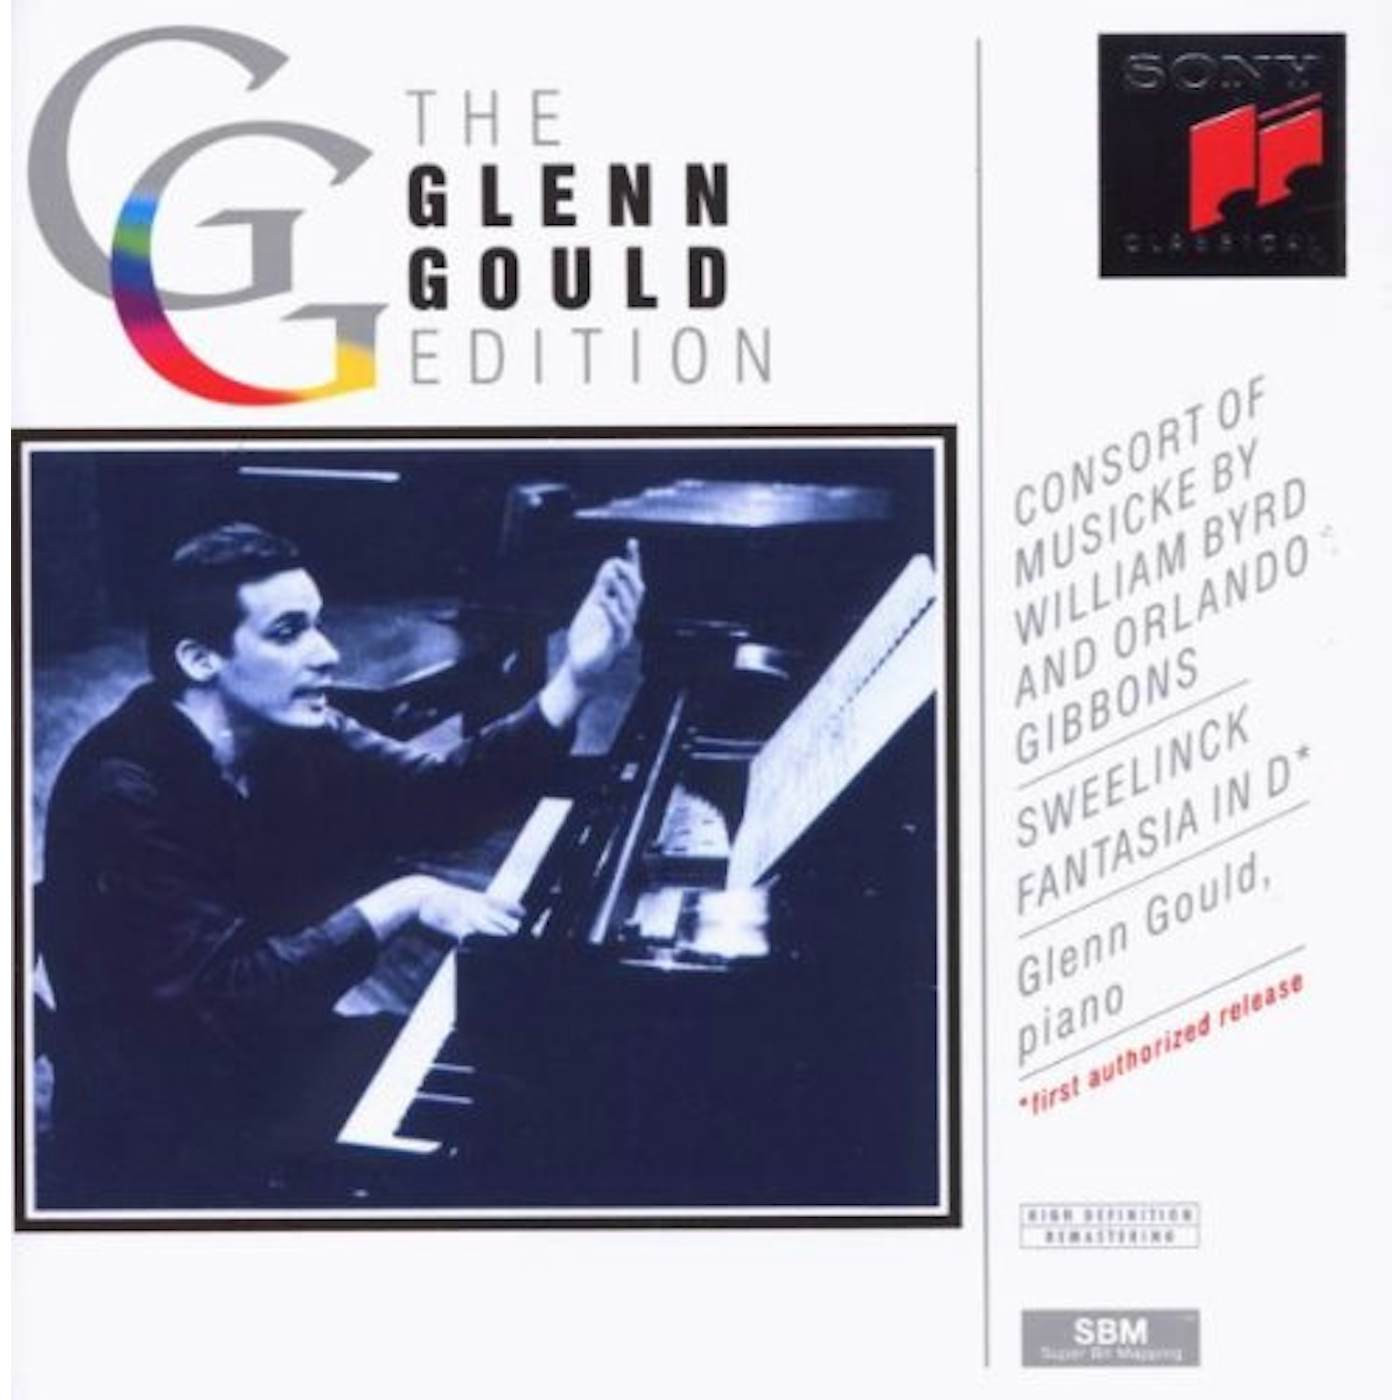 Glenn Gould CONSORT OF MUSICKE BY BYRD & GIBBONS CD